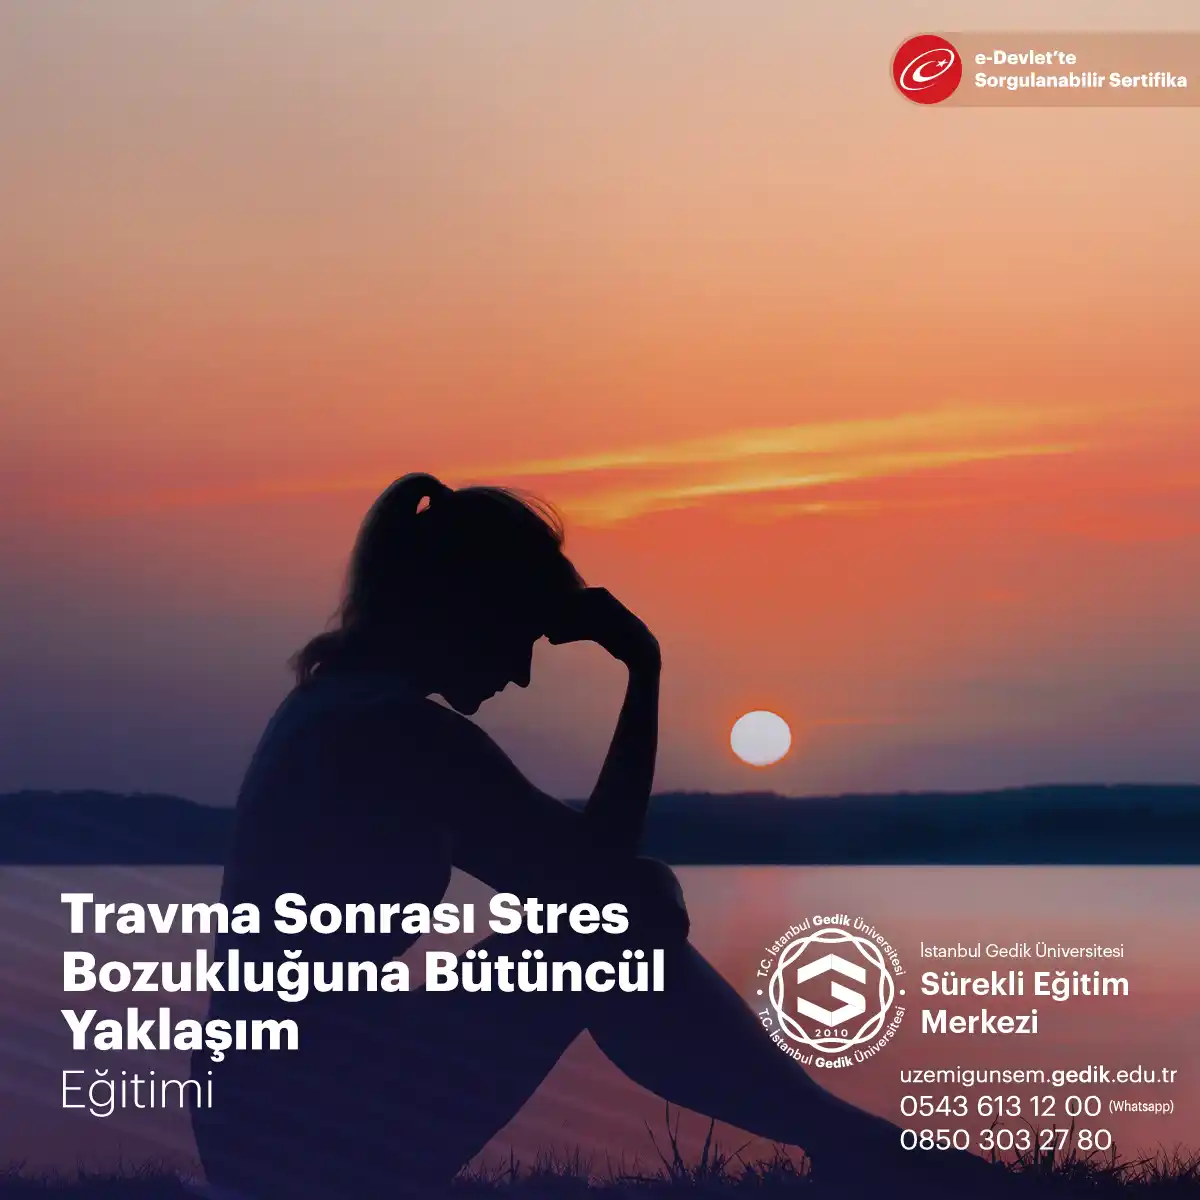 Travma Sonrası Stres Bozukluğuna Bütüncül Yaklaşım Sertifika Programı